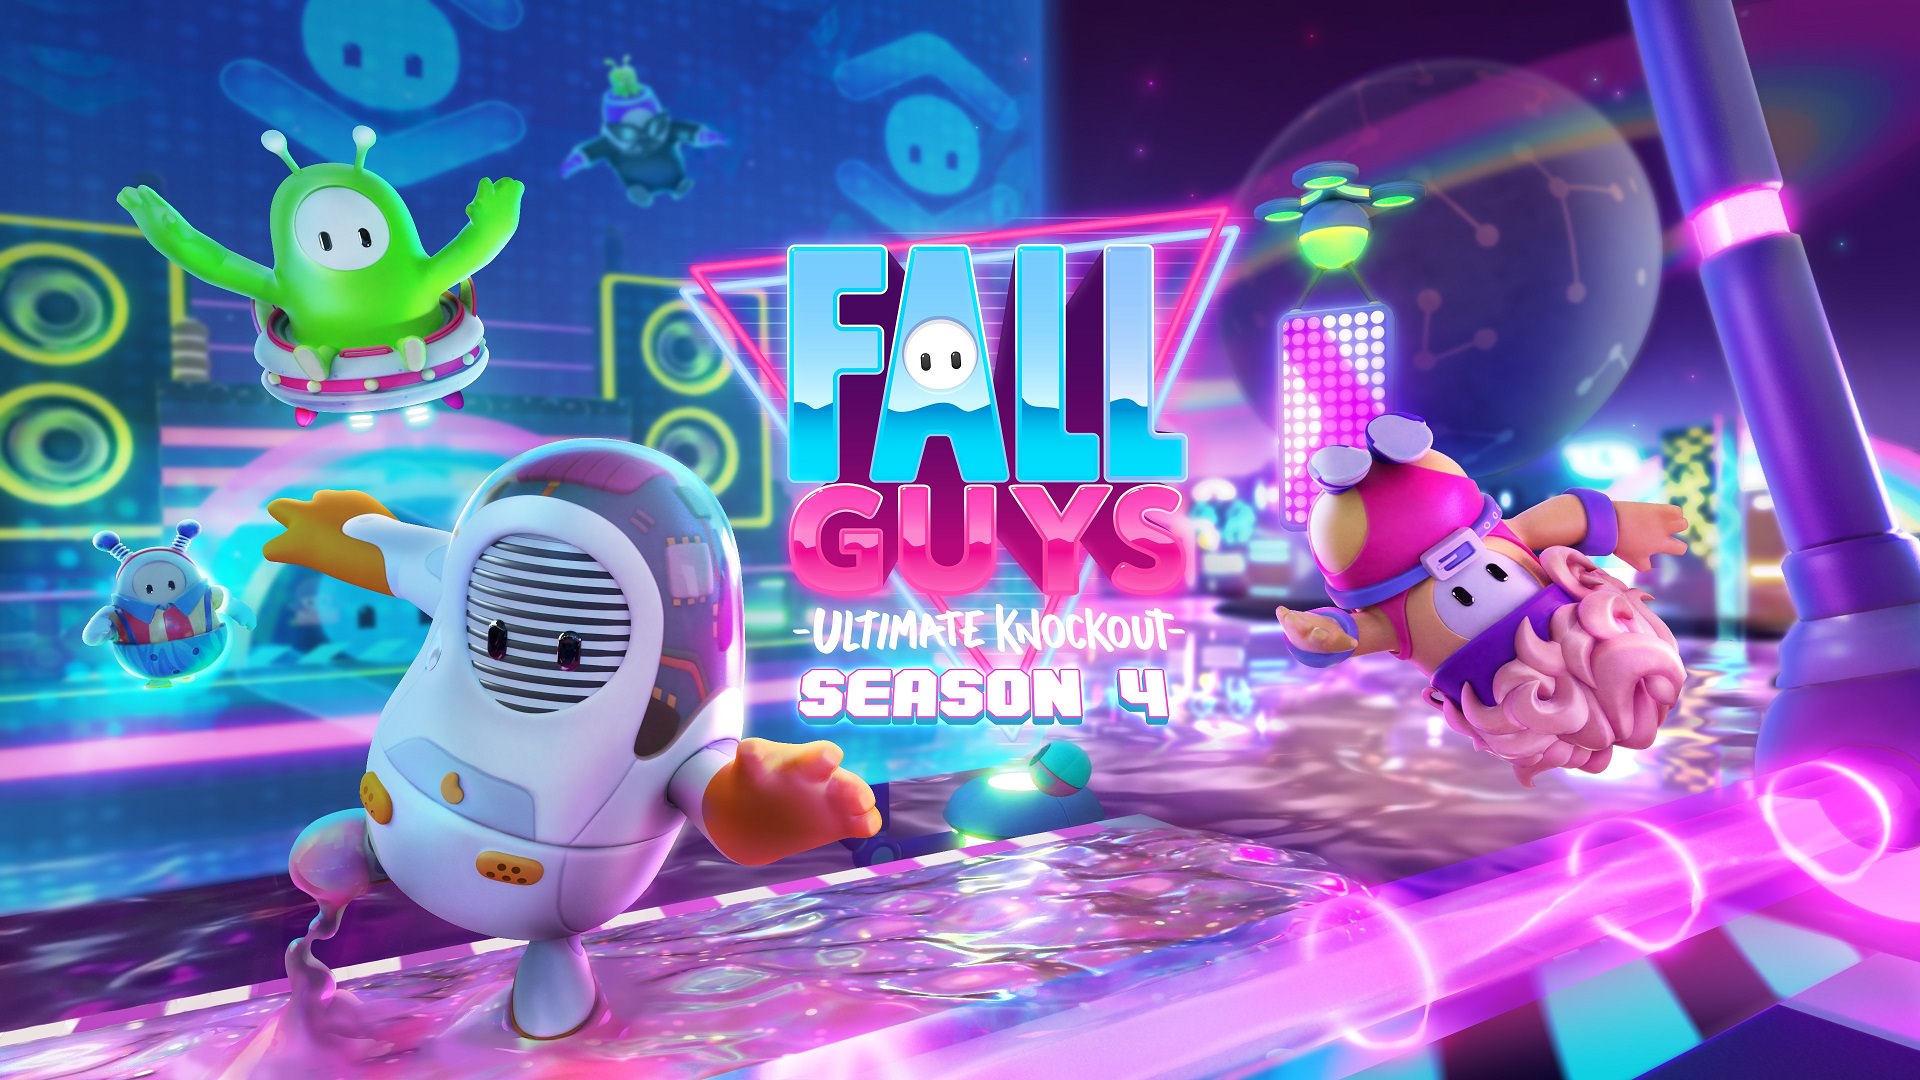 The fourth season of Fall Guys game